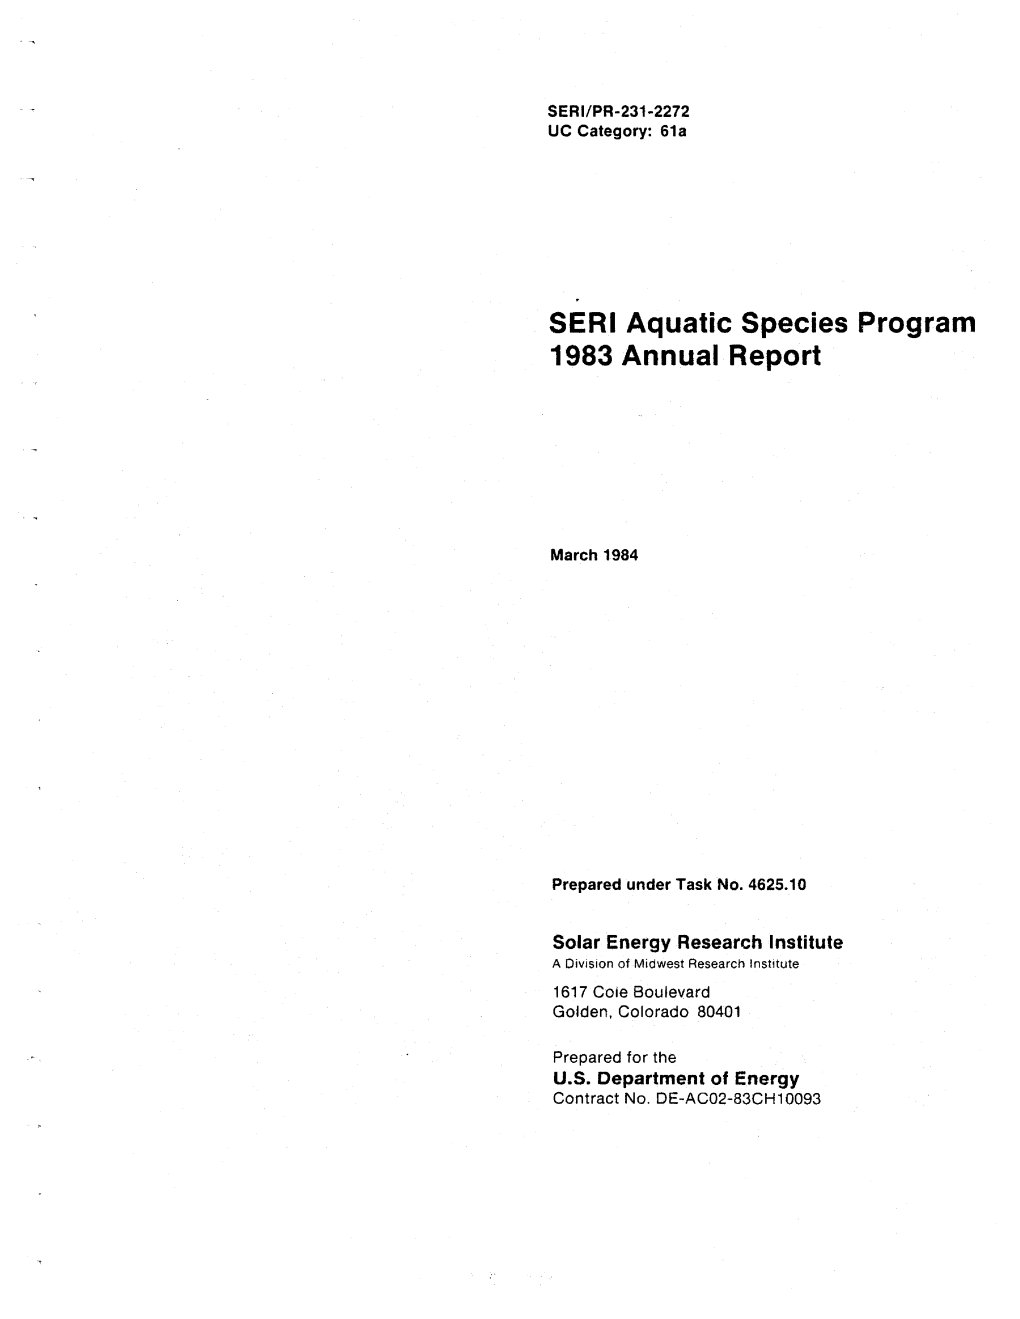 SERI Aquatic Species Program: 1983 Annual Report